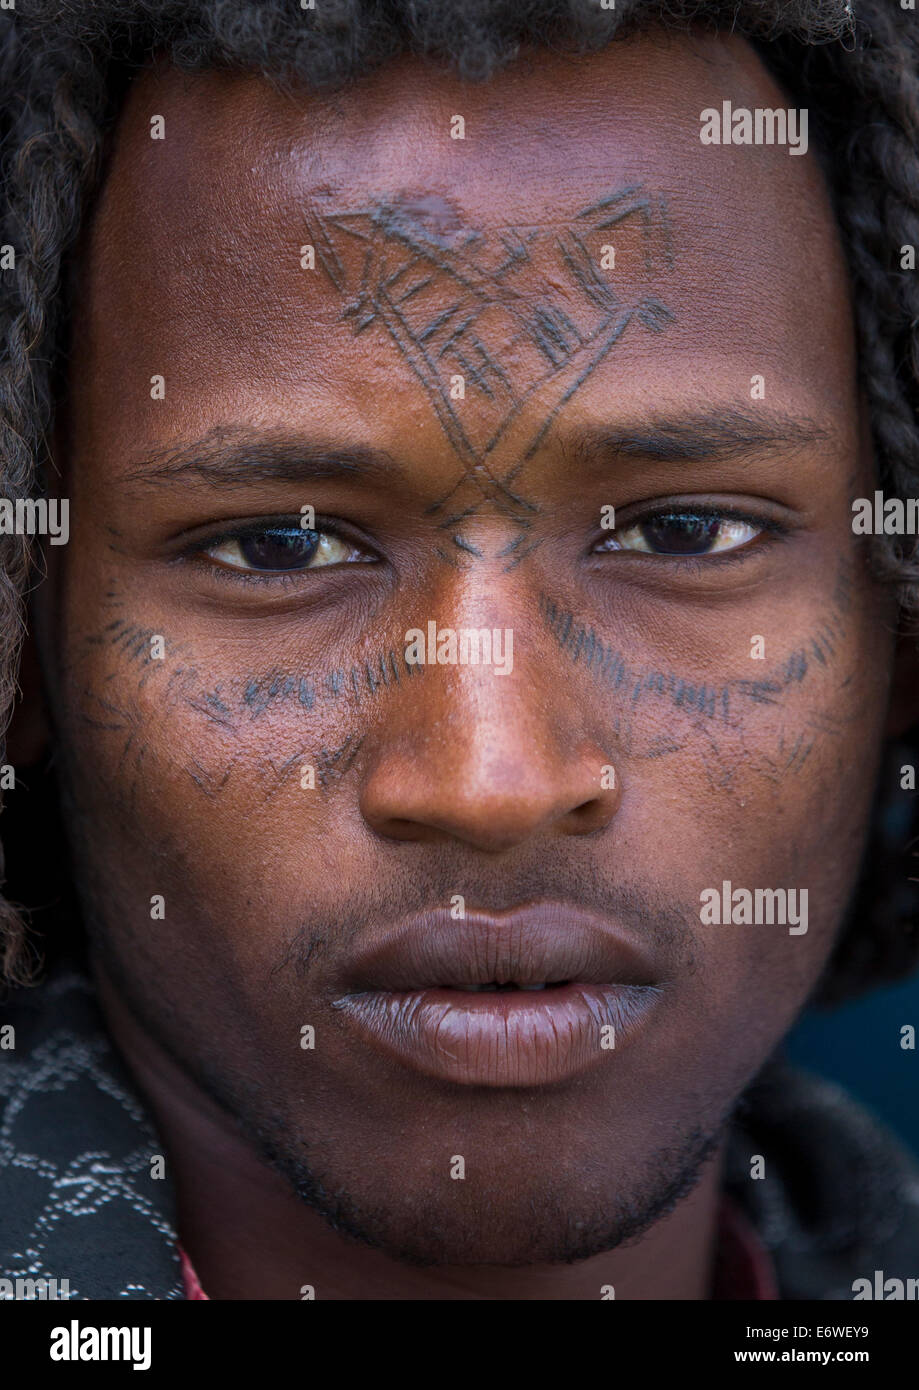 Etnia Afar uomo Con capelli ricci e tatuaggi facciali, Assayta, Etiopia  Foto stock - Alamy